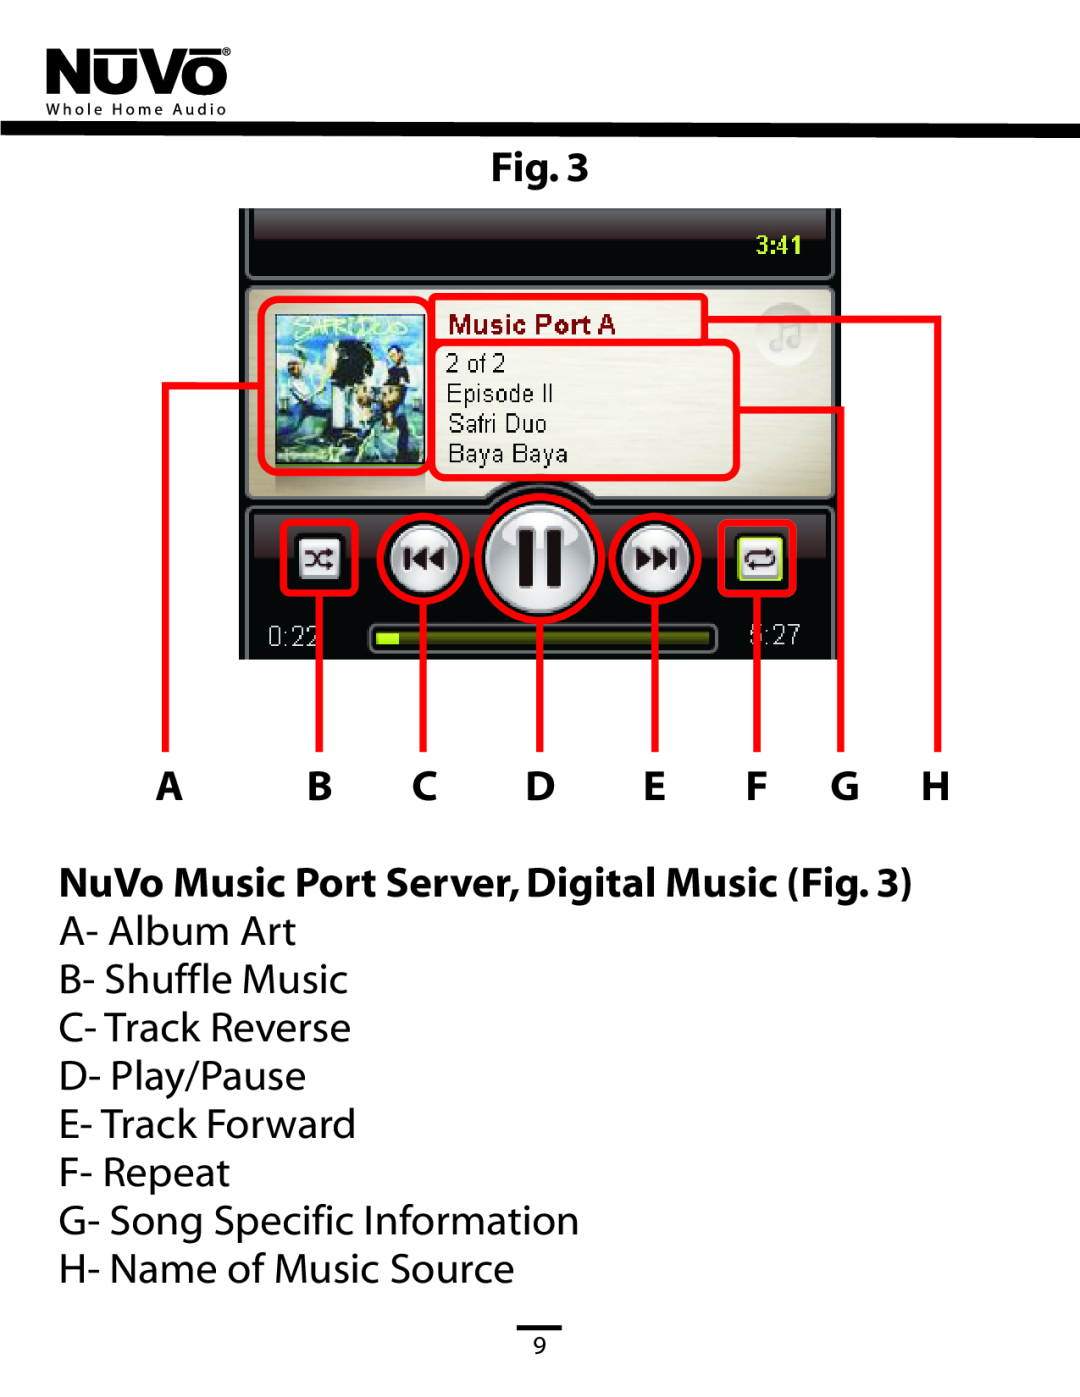 Nuvo NV-CTP36 Fig. A B C D E F G H, NuVo Music Port Server, Digital Music Fig, D- Play/Pause E- Track Forward F- Repeat 